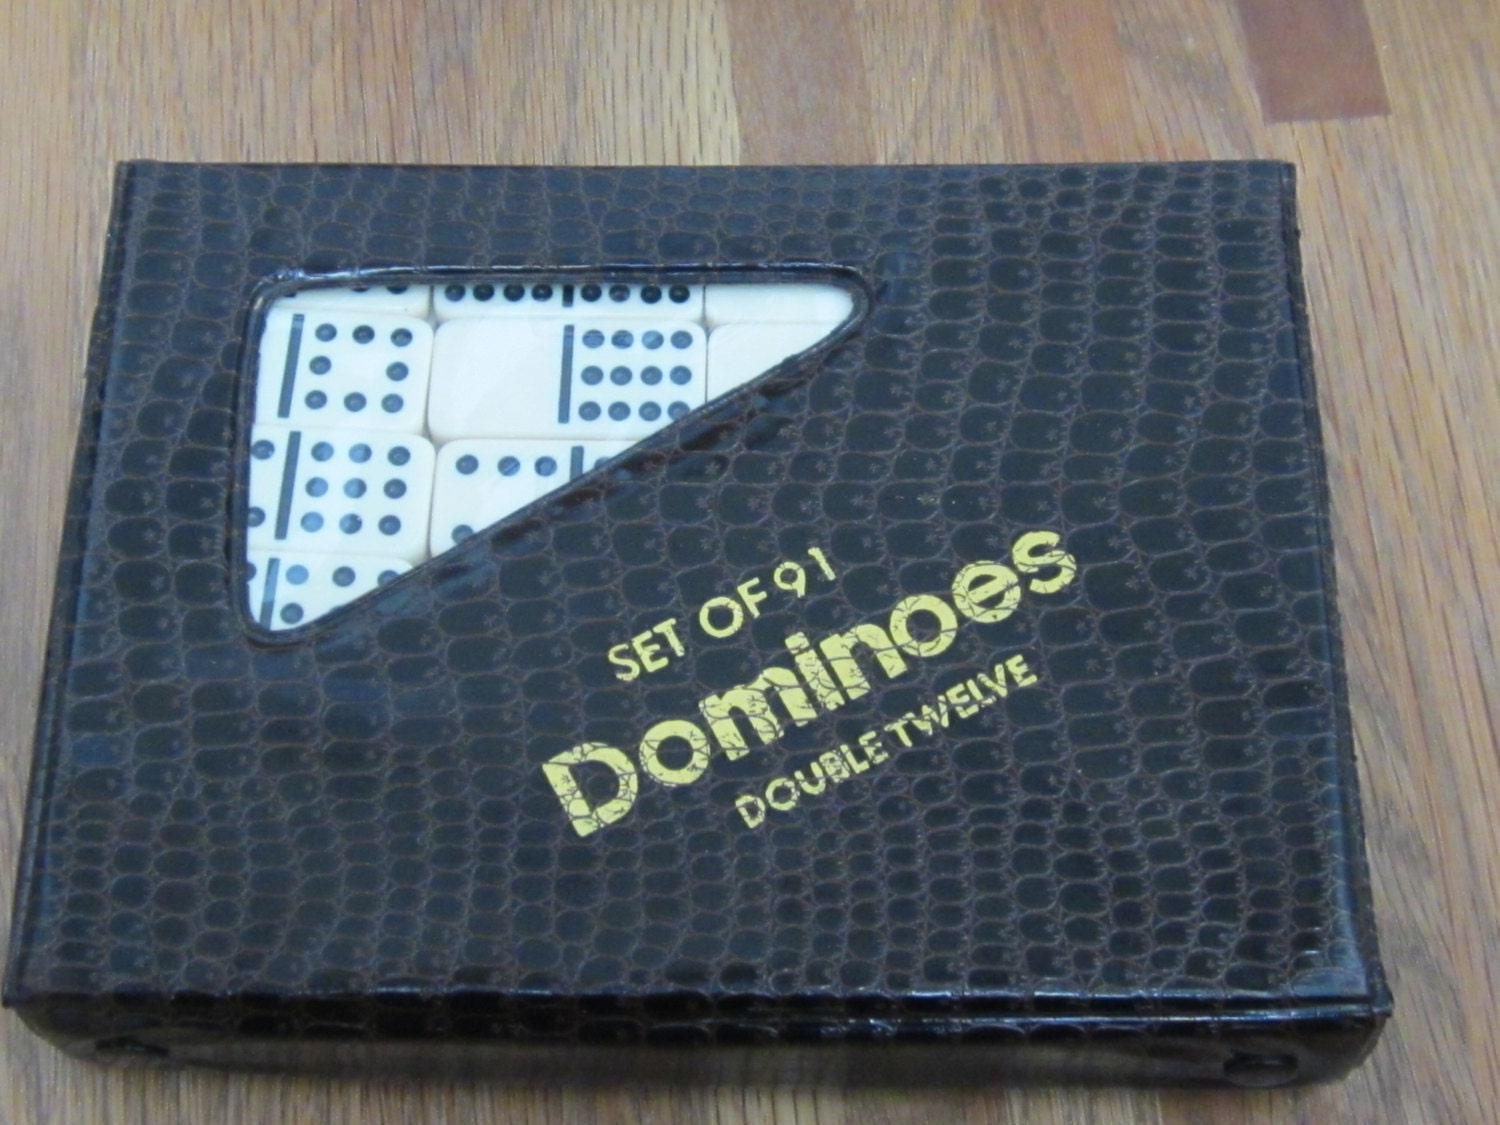 dominoes double 12